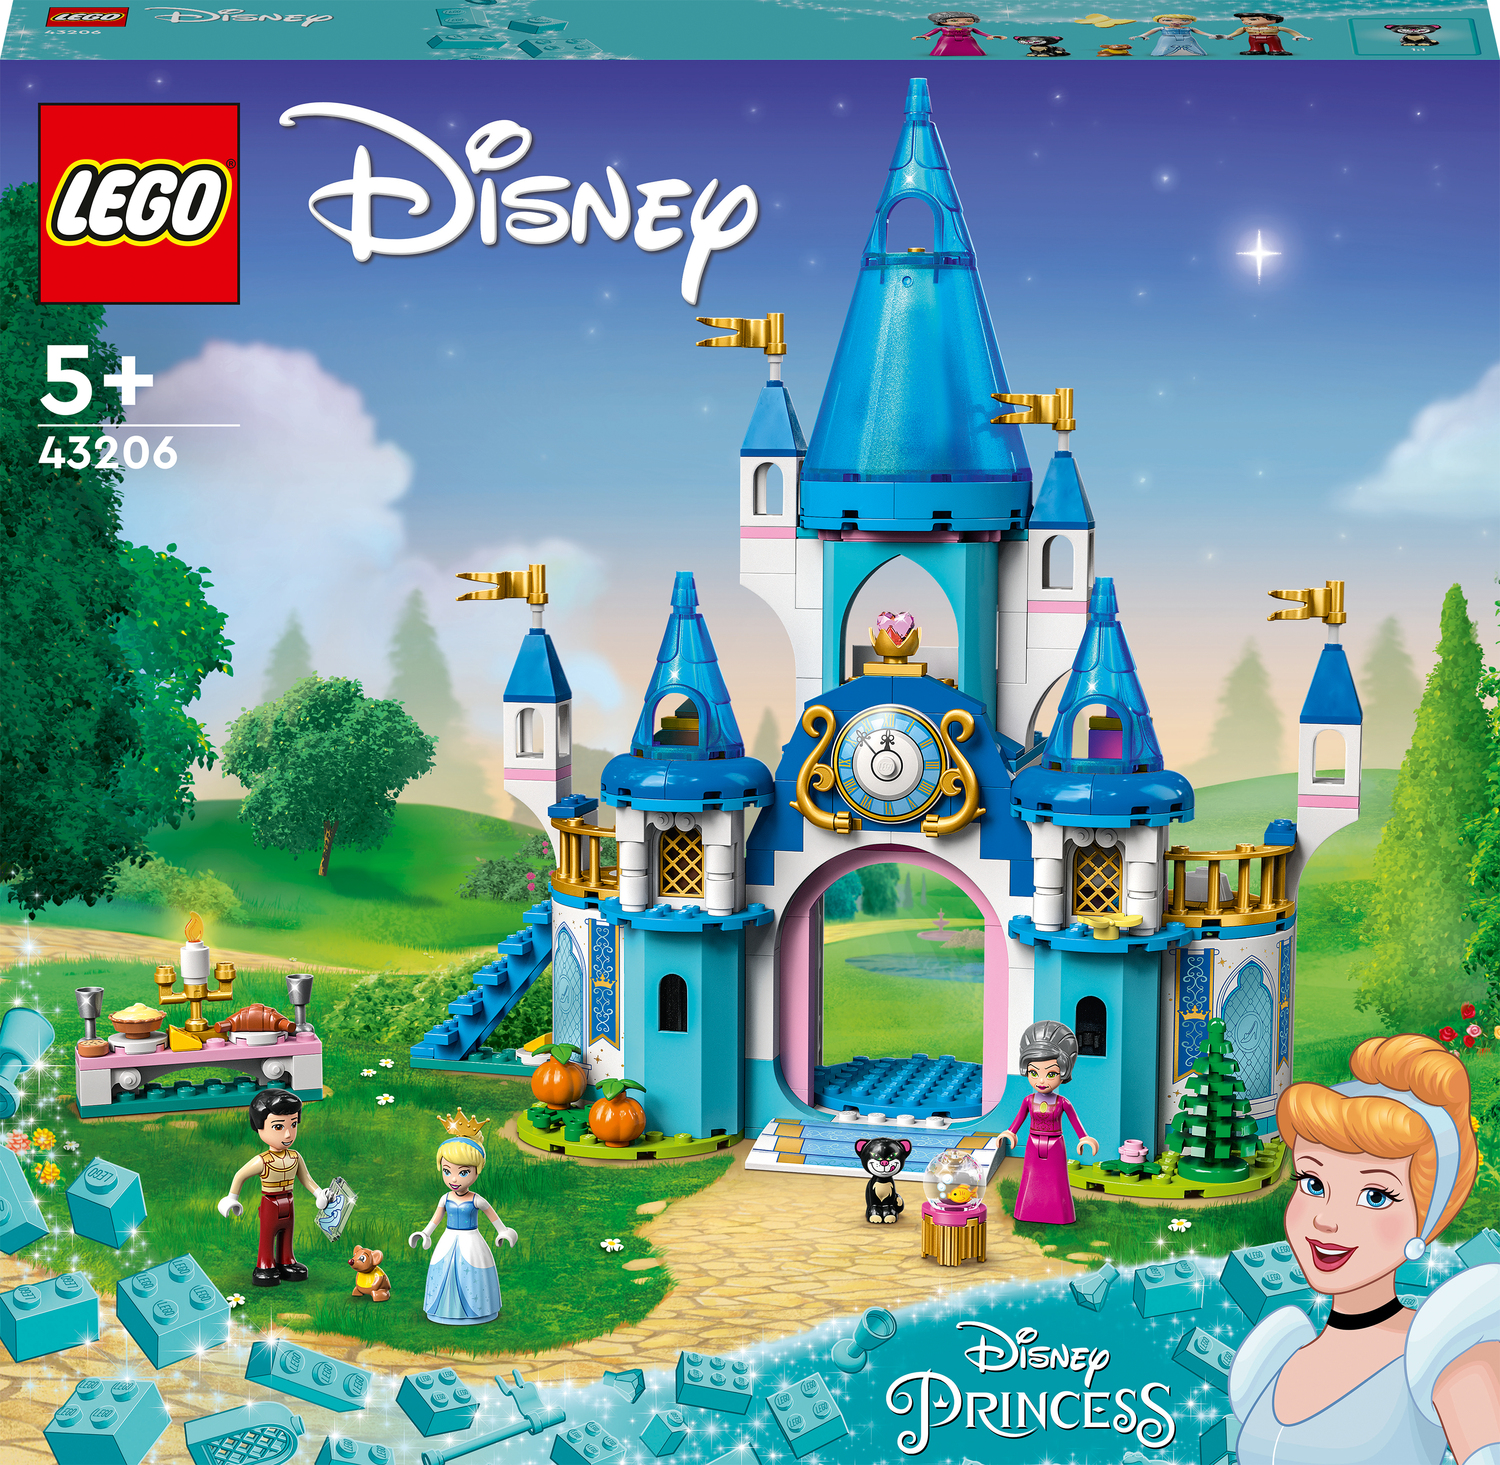 LEGO Disney Cinderella & Prince Charming's Castle Set